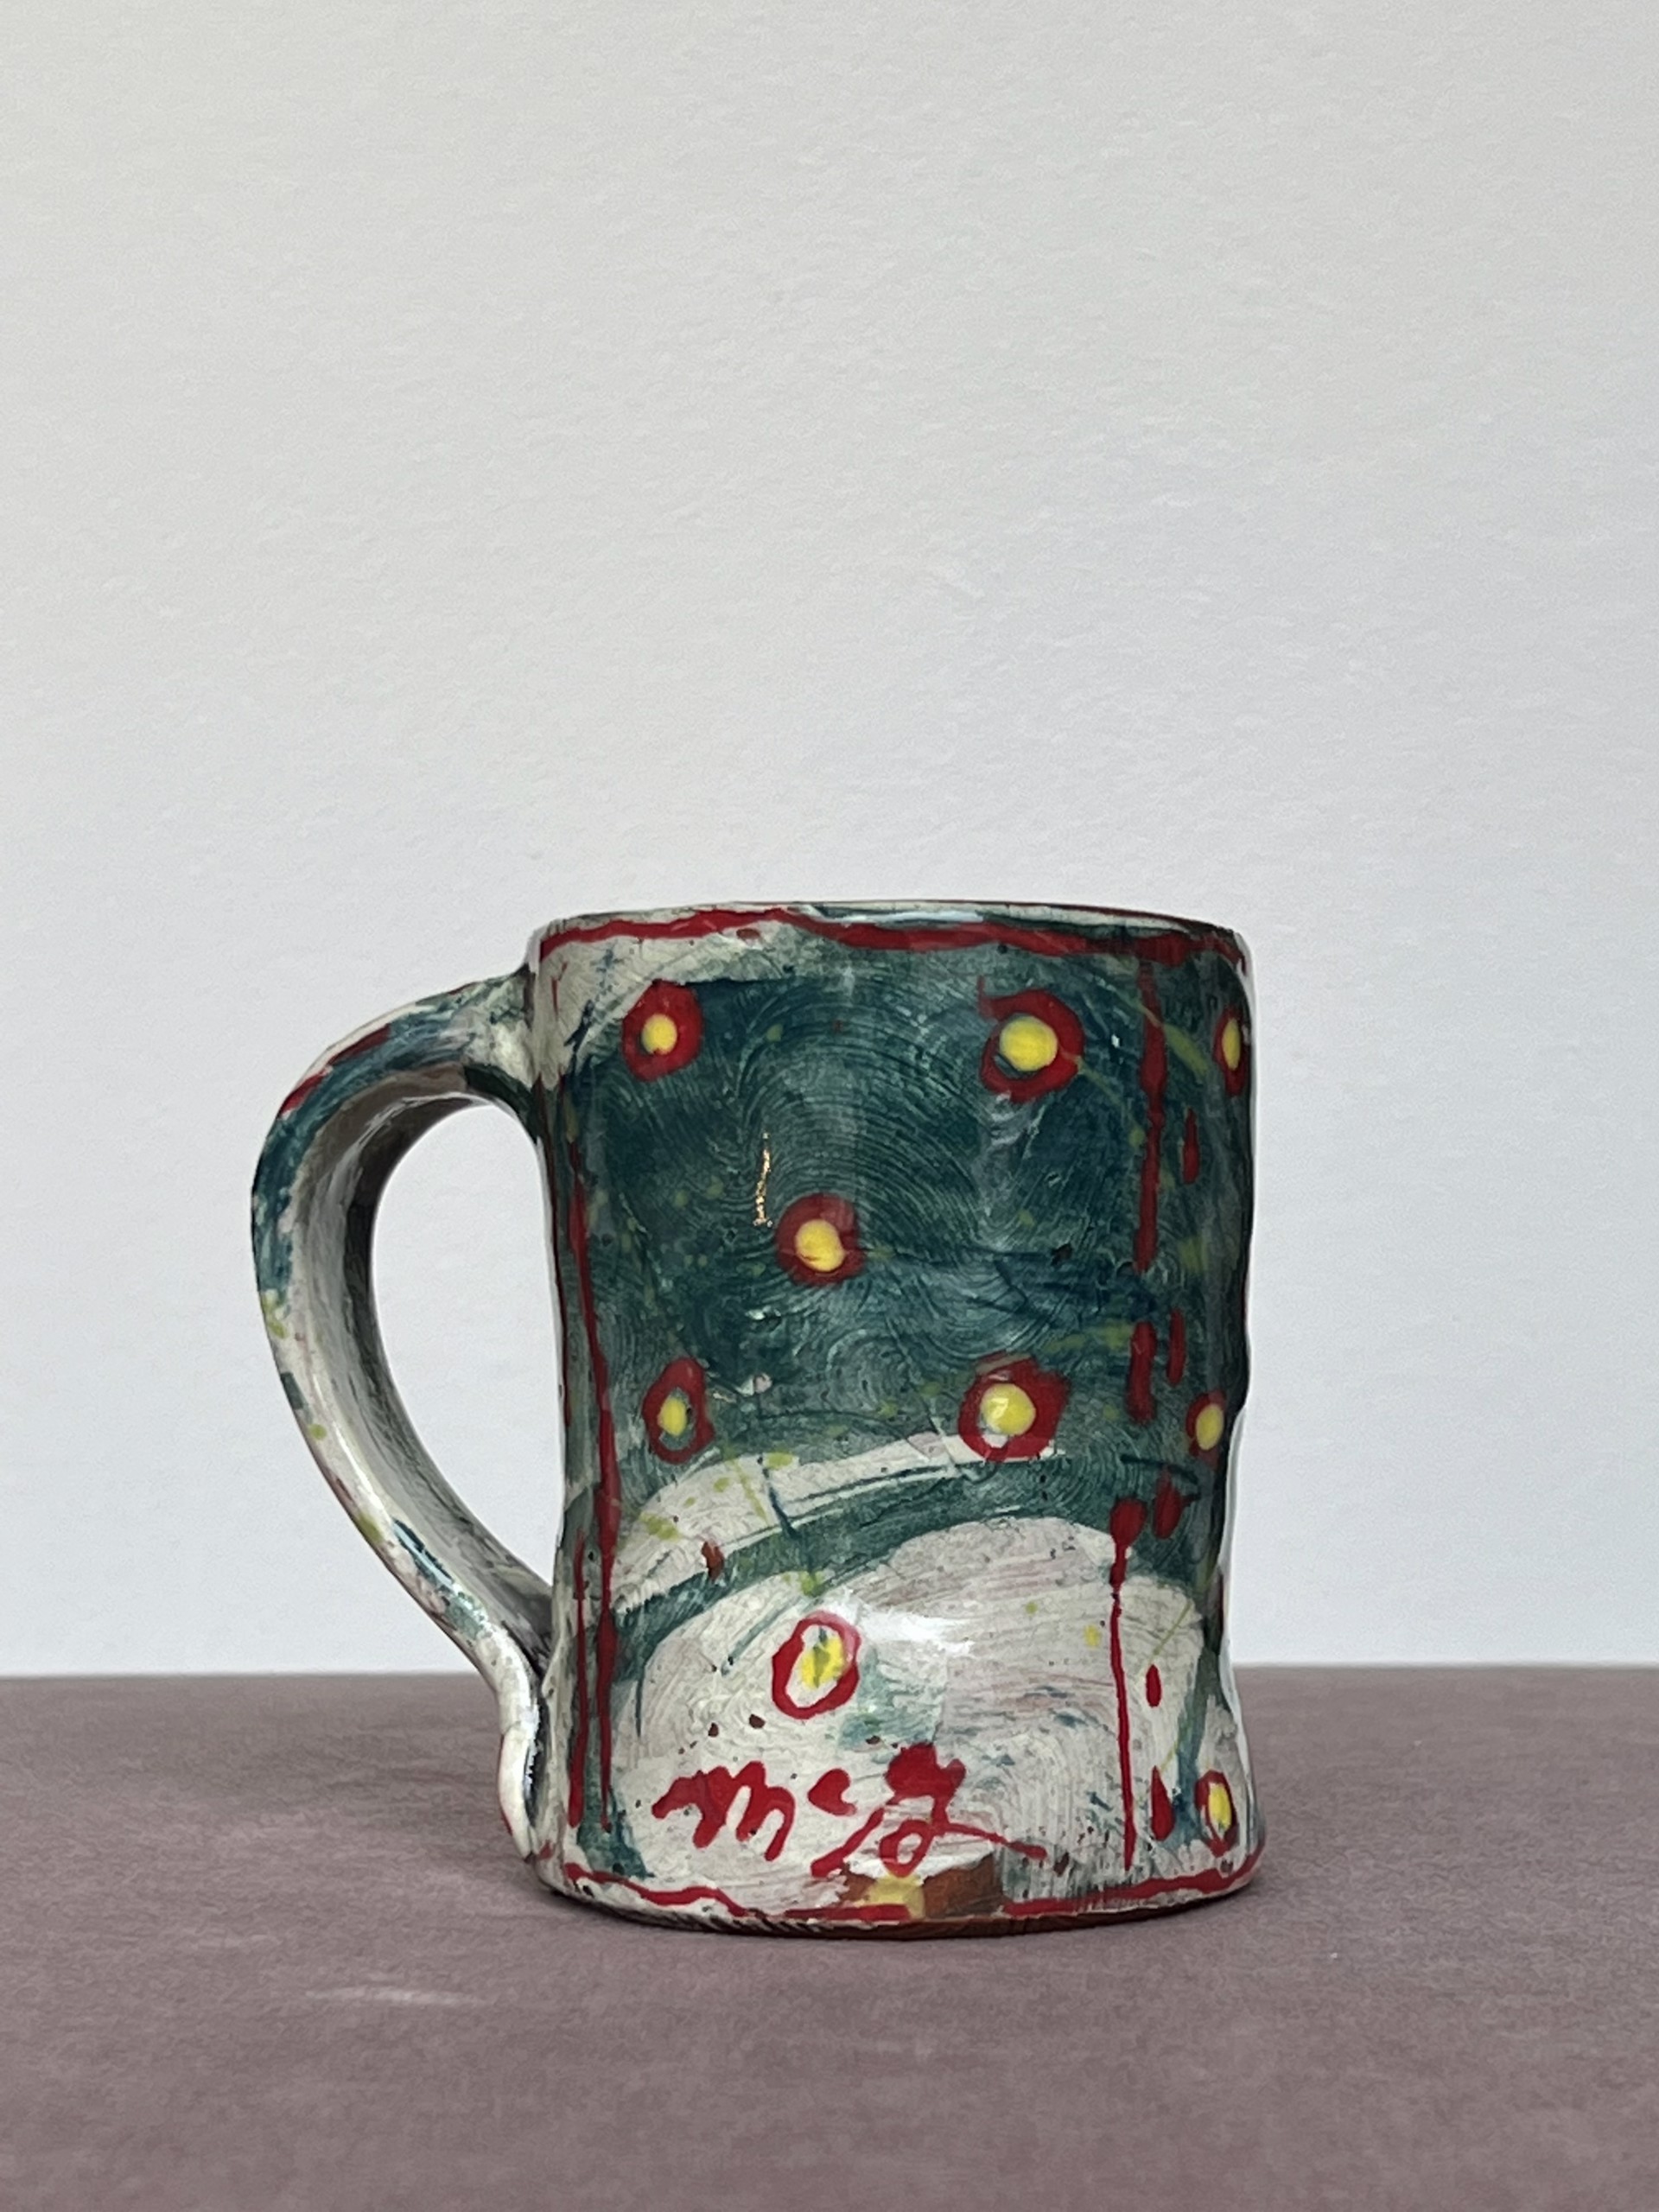 Teal & Red Mug No. 1 by Susan McGilvrey